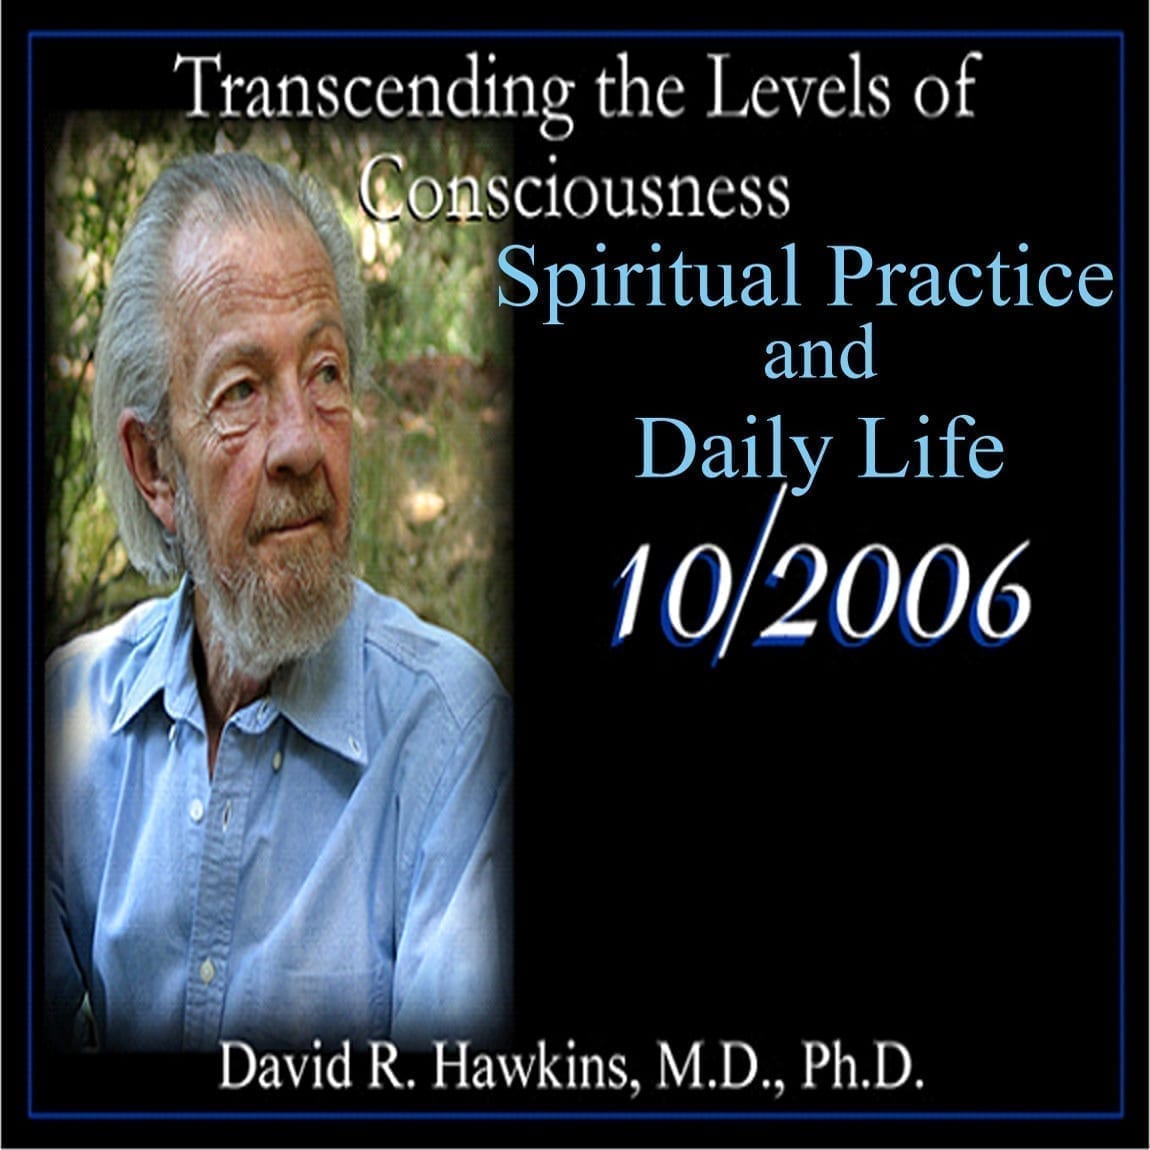 Spiritual Practice and Daily Life (Oct 2006)